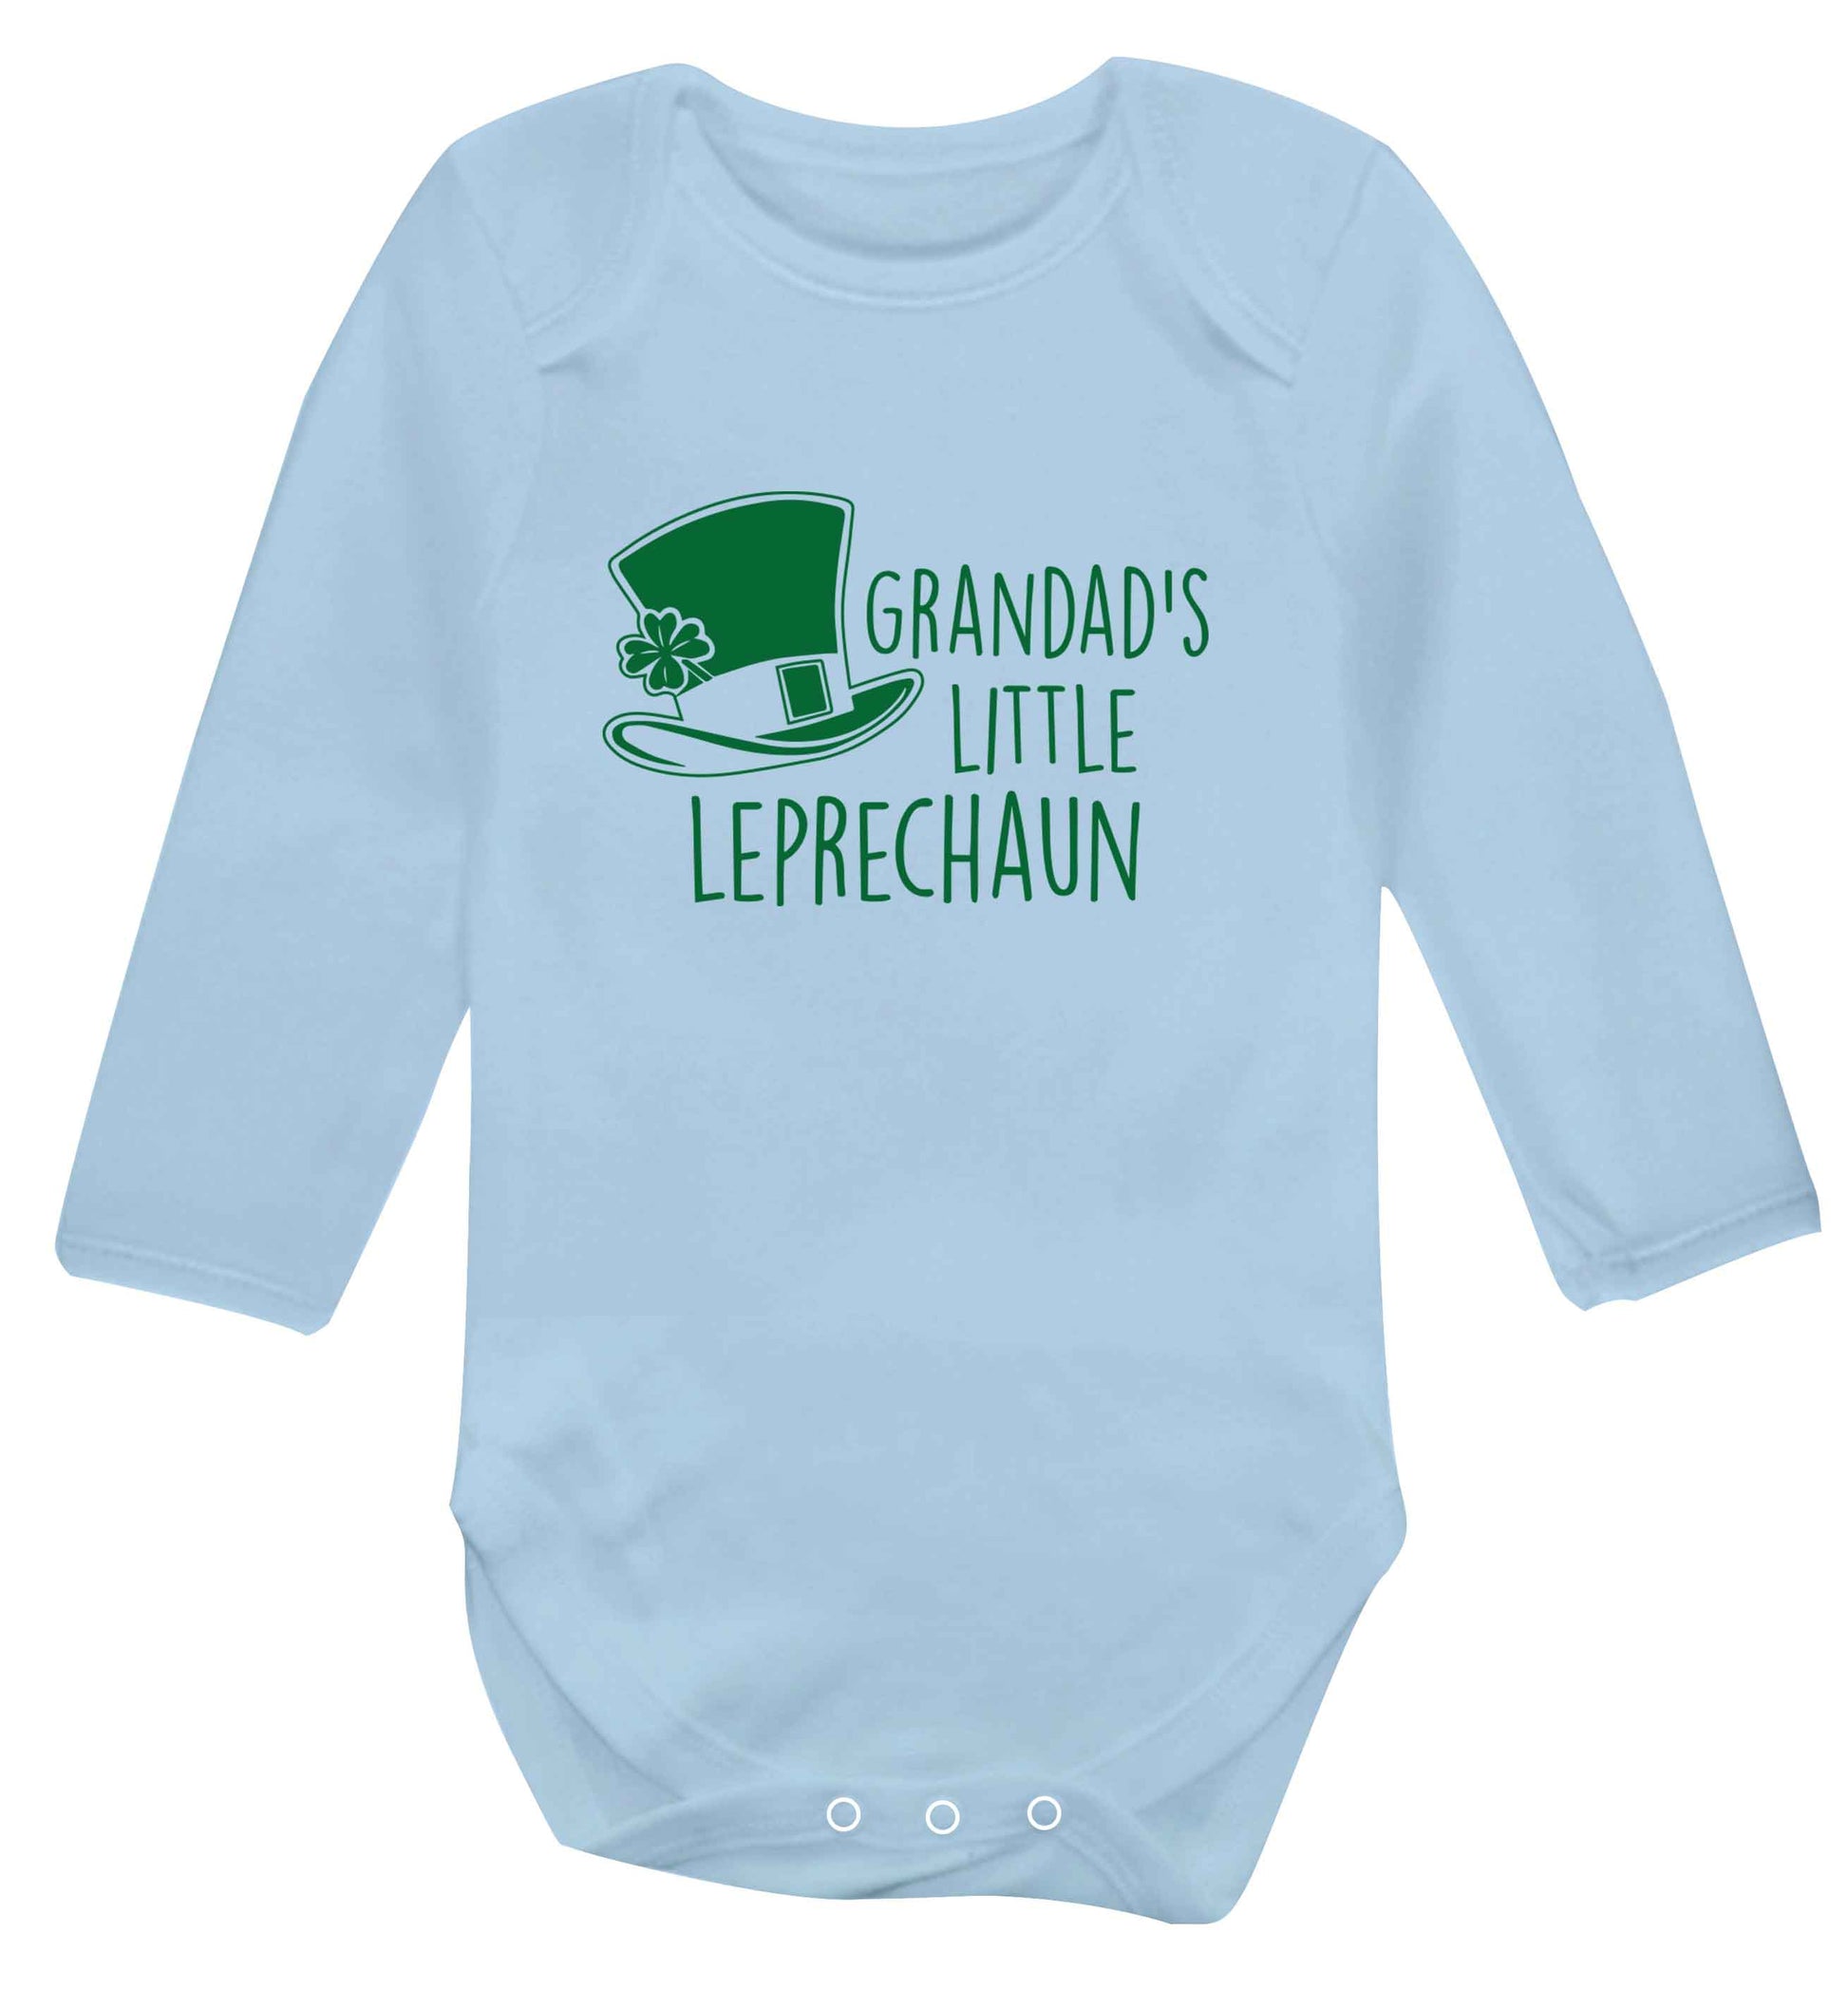 Grandad's little leprechaun baby vest long sleeved pale blue 6-12 months